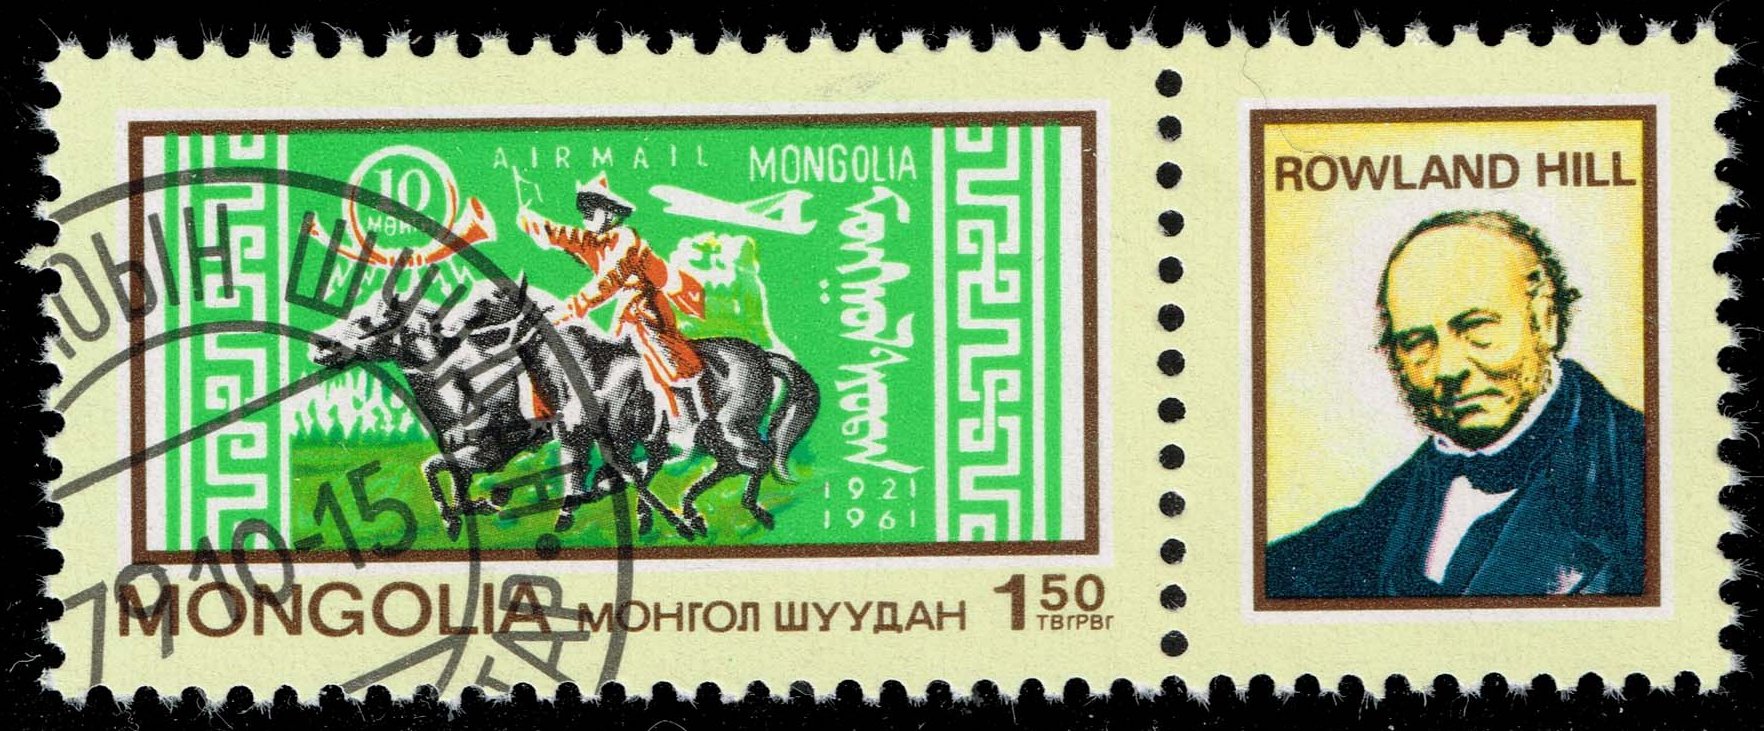 Mongolia #1096c Mongloia #C1 plus label; CTO